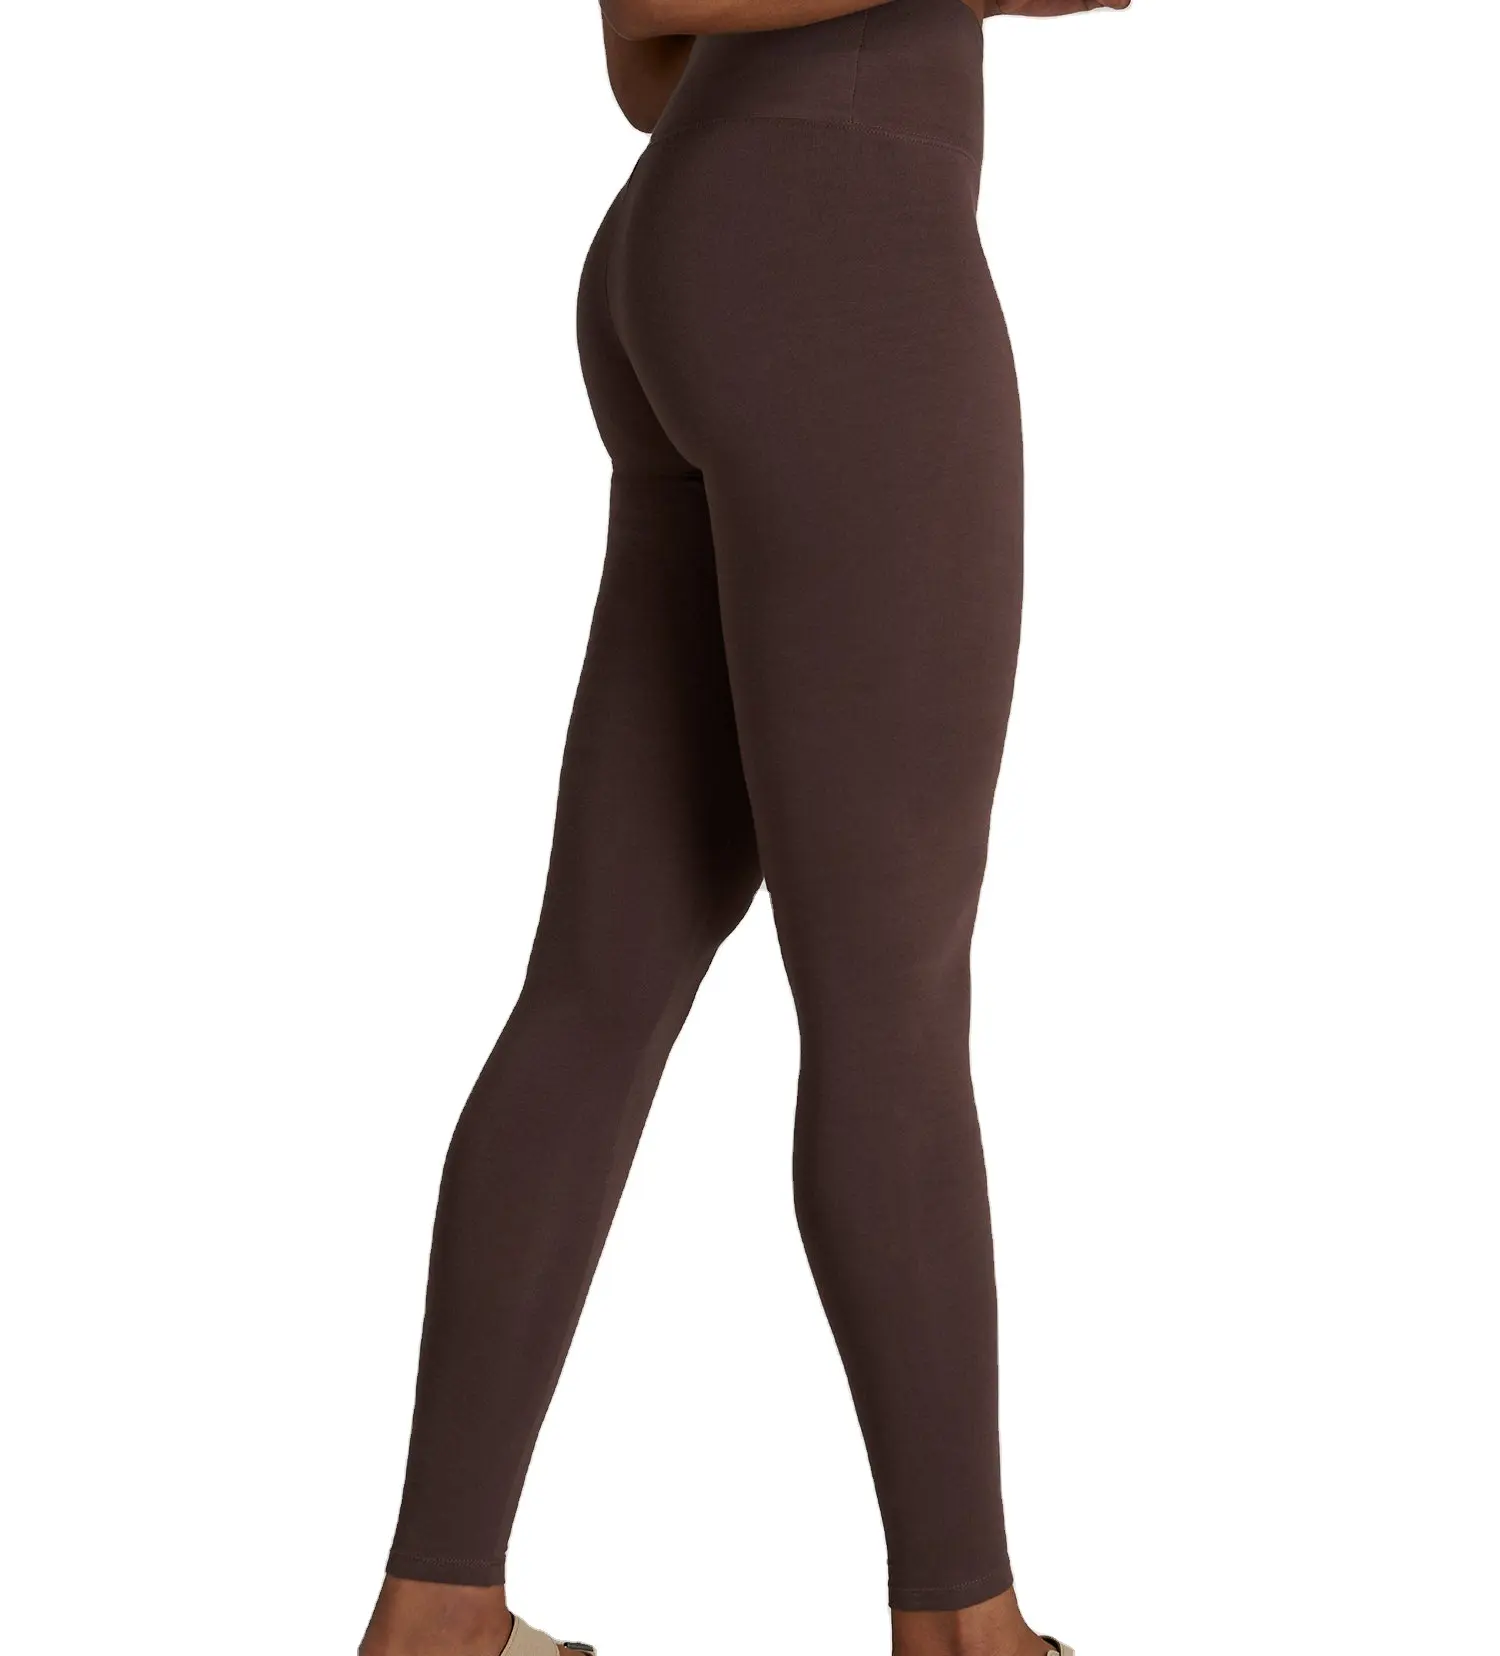 Hot sale promotion leggings manufacturer cotton leggings for women yoga pant legging